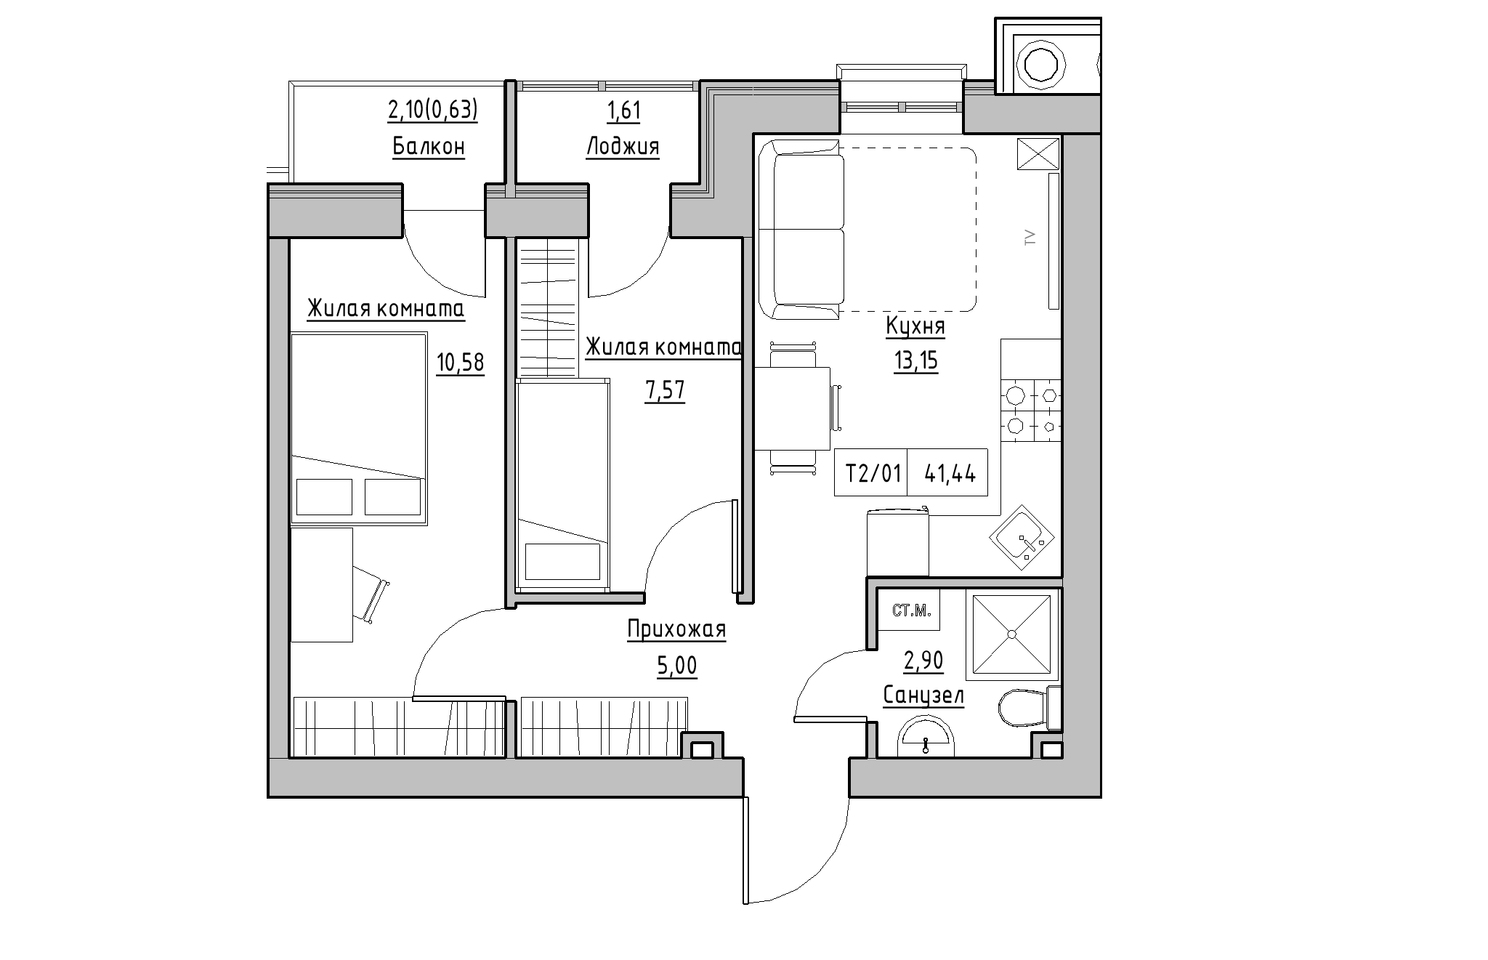 Planning 2-rm flats area 41.44m2, KS-010-03/0005.